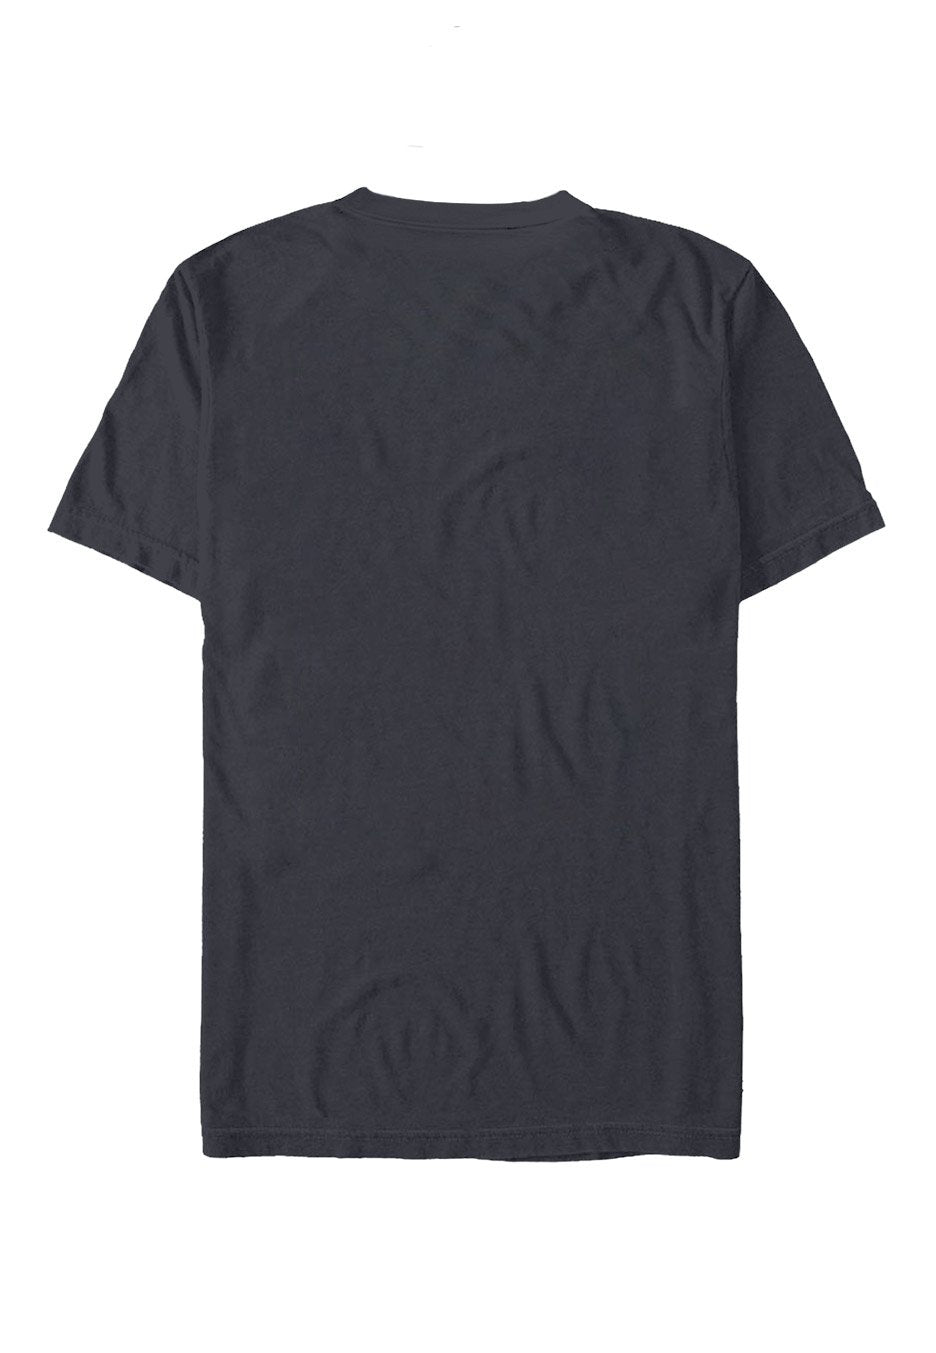 Nirvana - Serve The Serpense Charcoal - T-Shirt | Neutral-Image